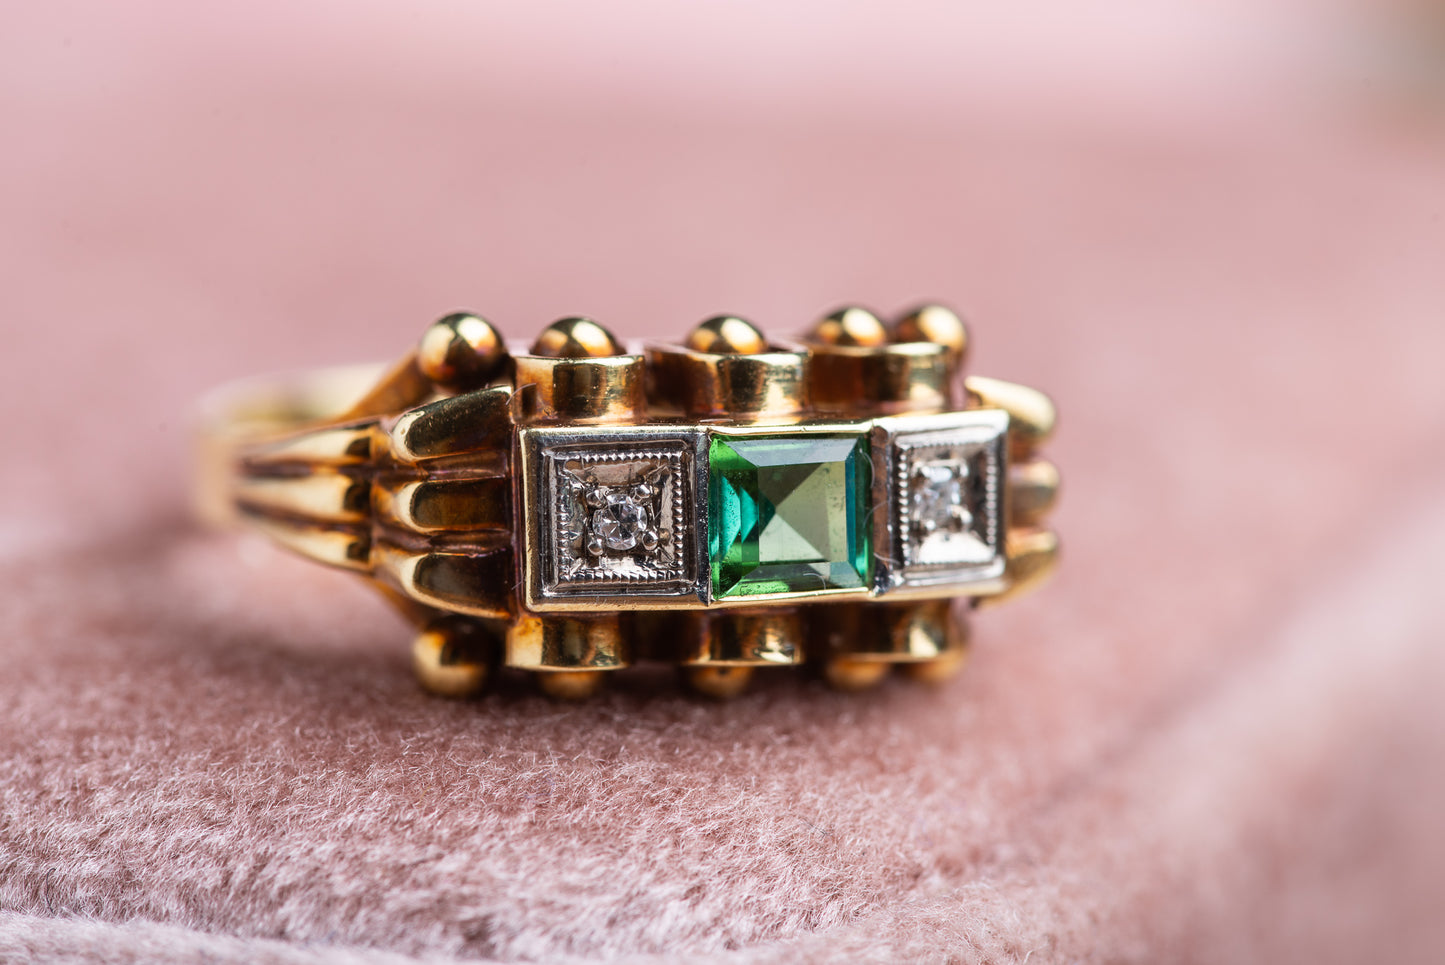 Exquisite 14K Tank Ring with Diamonds and Princess-Cut Tourmaline